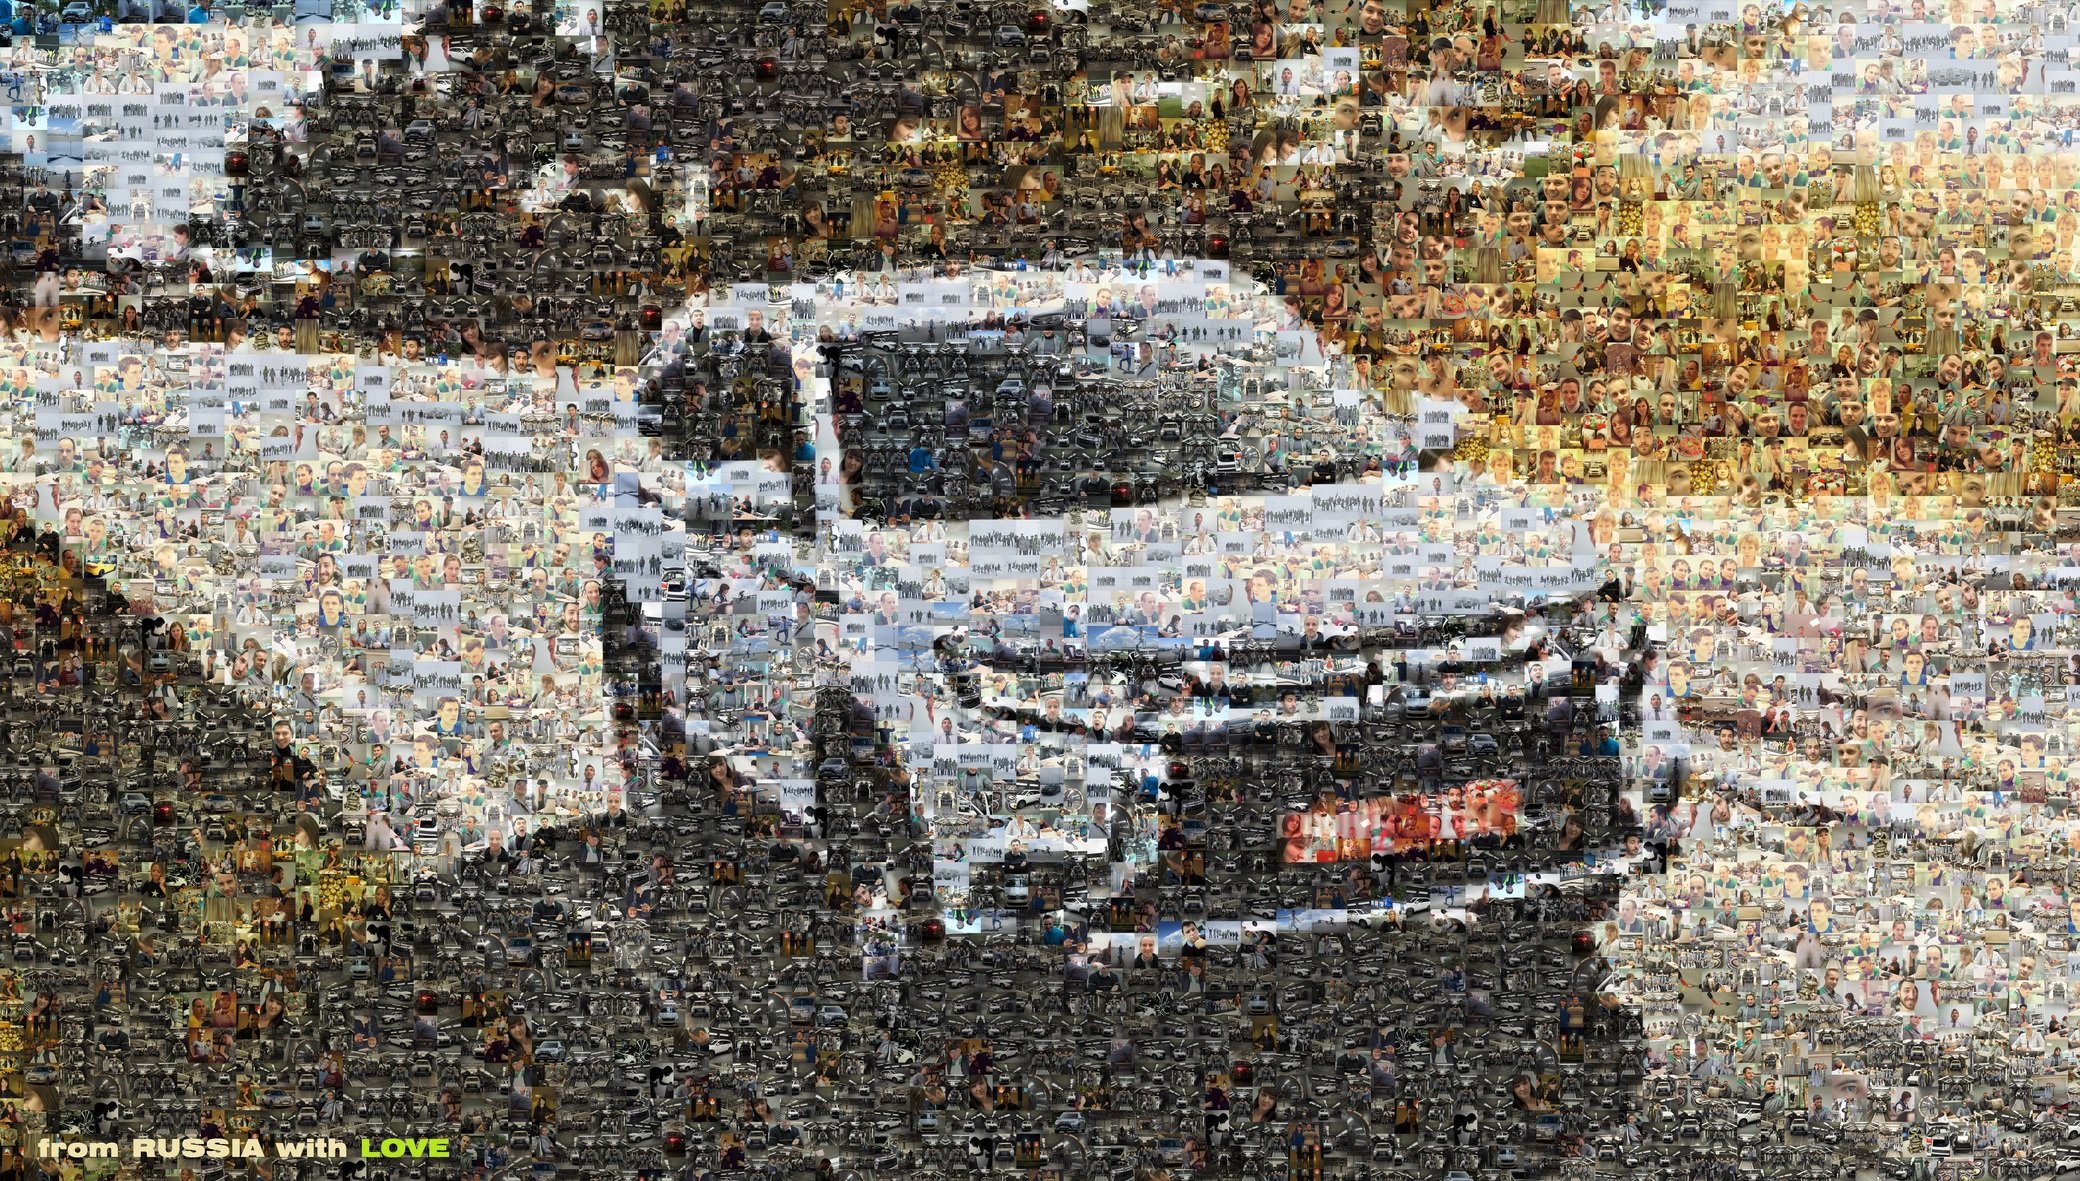 Mitsubishi Outlander. Коллаж из фото сотрудников Качества